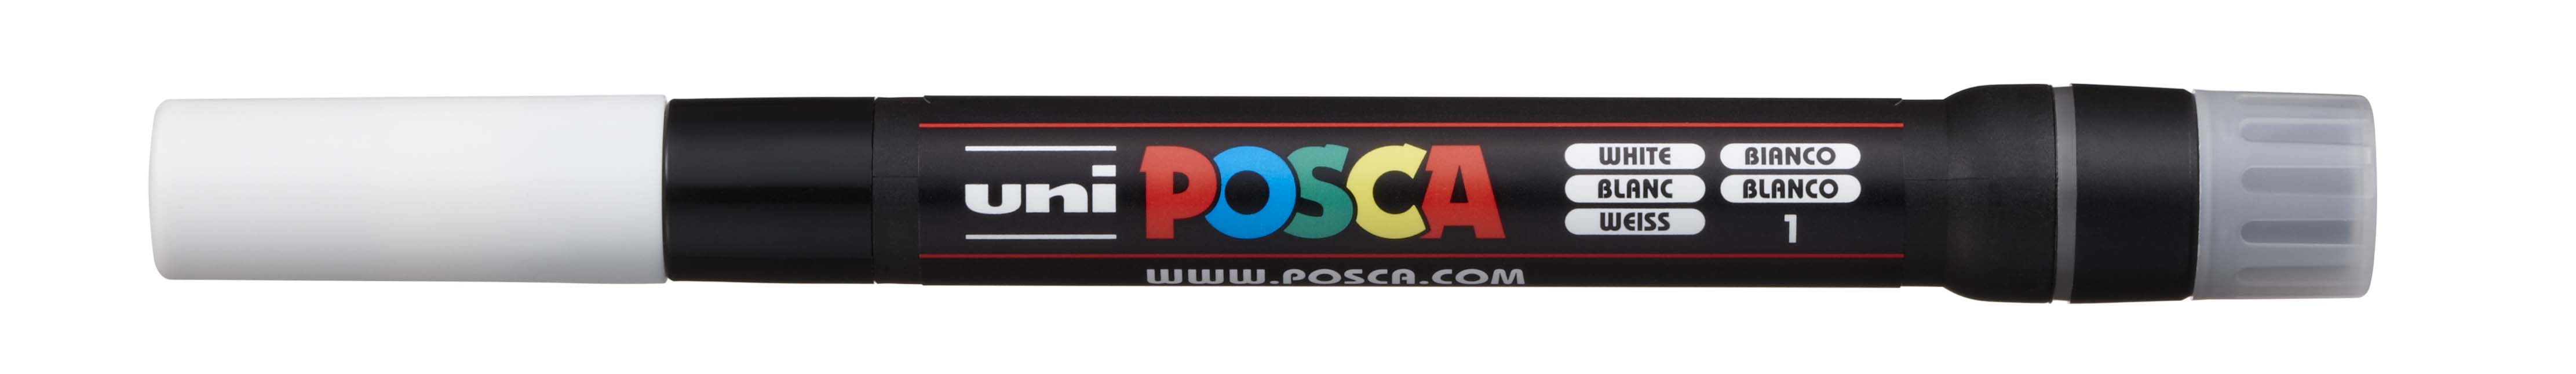 PCF-350 CANETA POSCA BRANCO